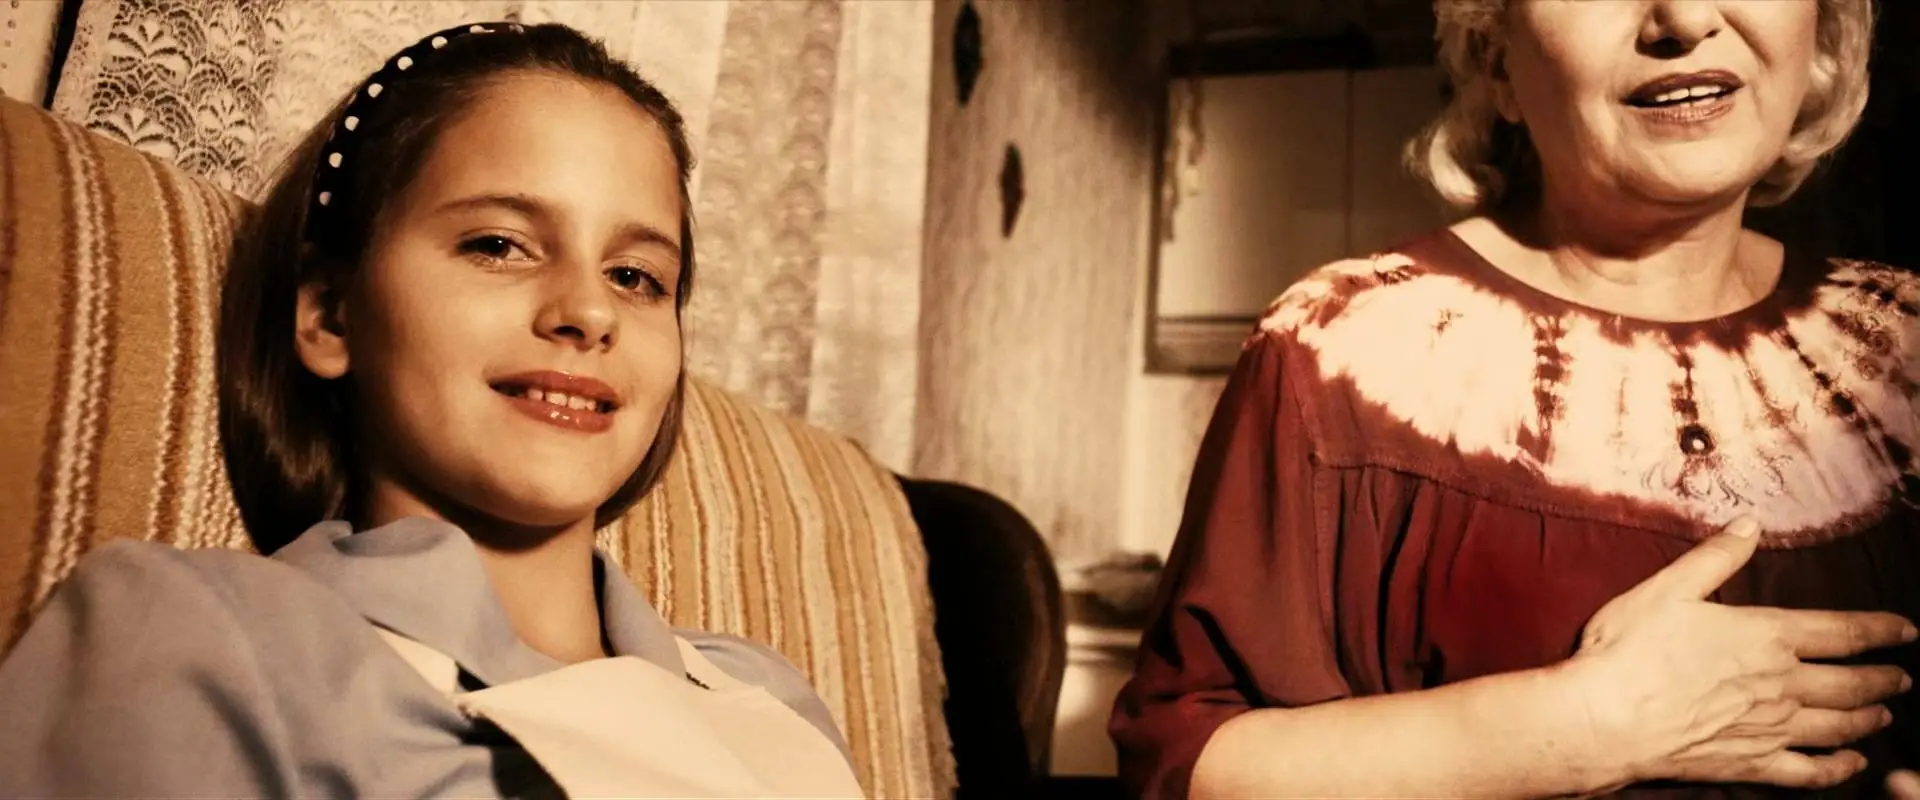 a serbian film 2010